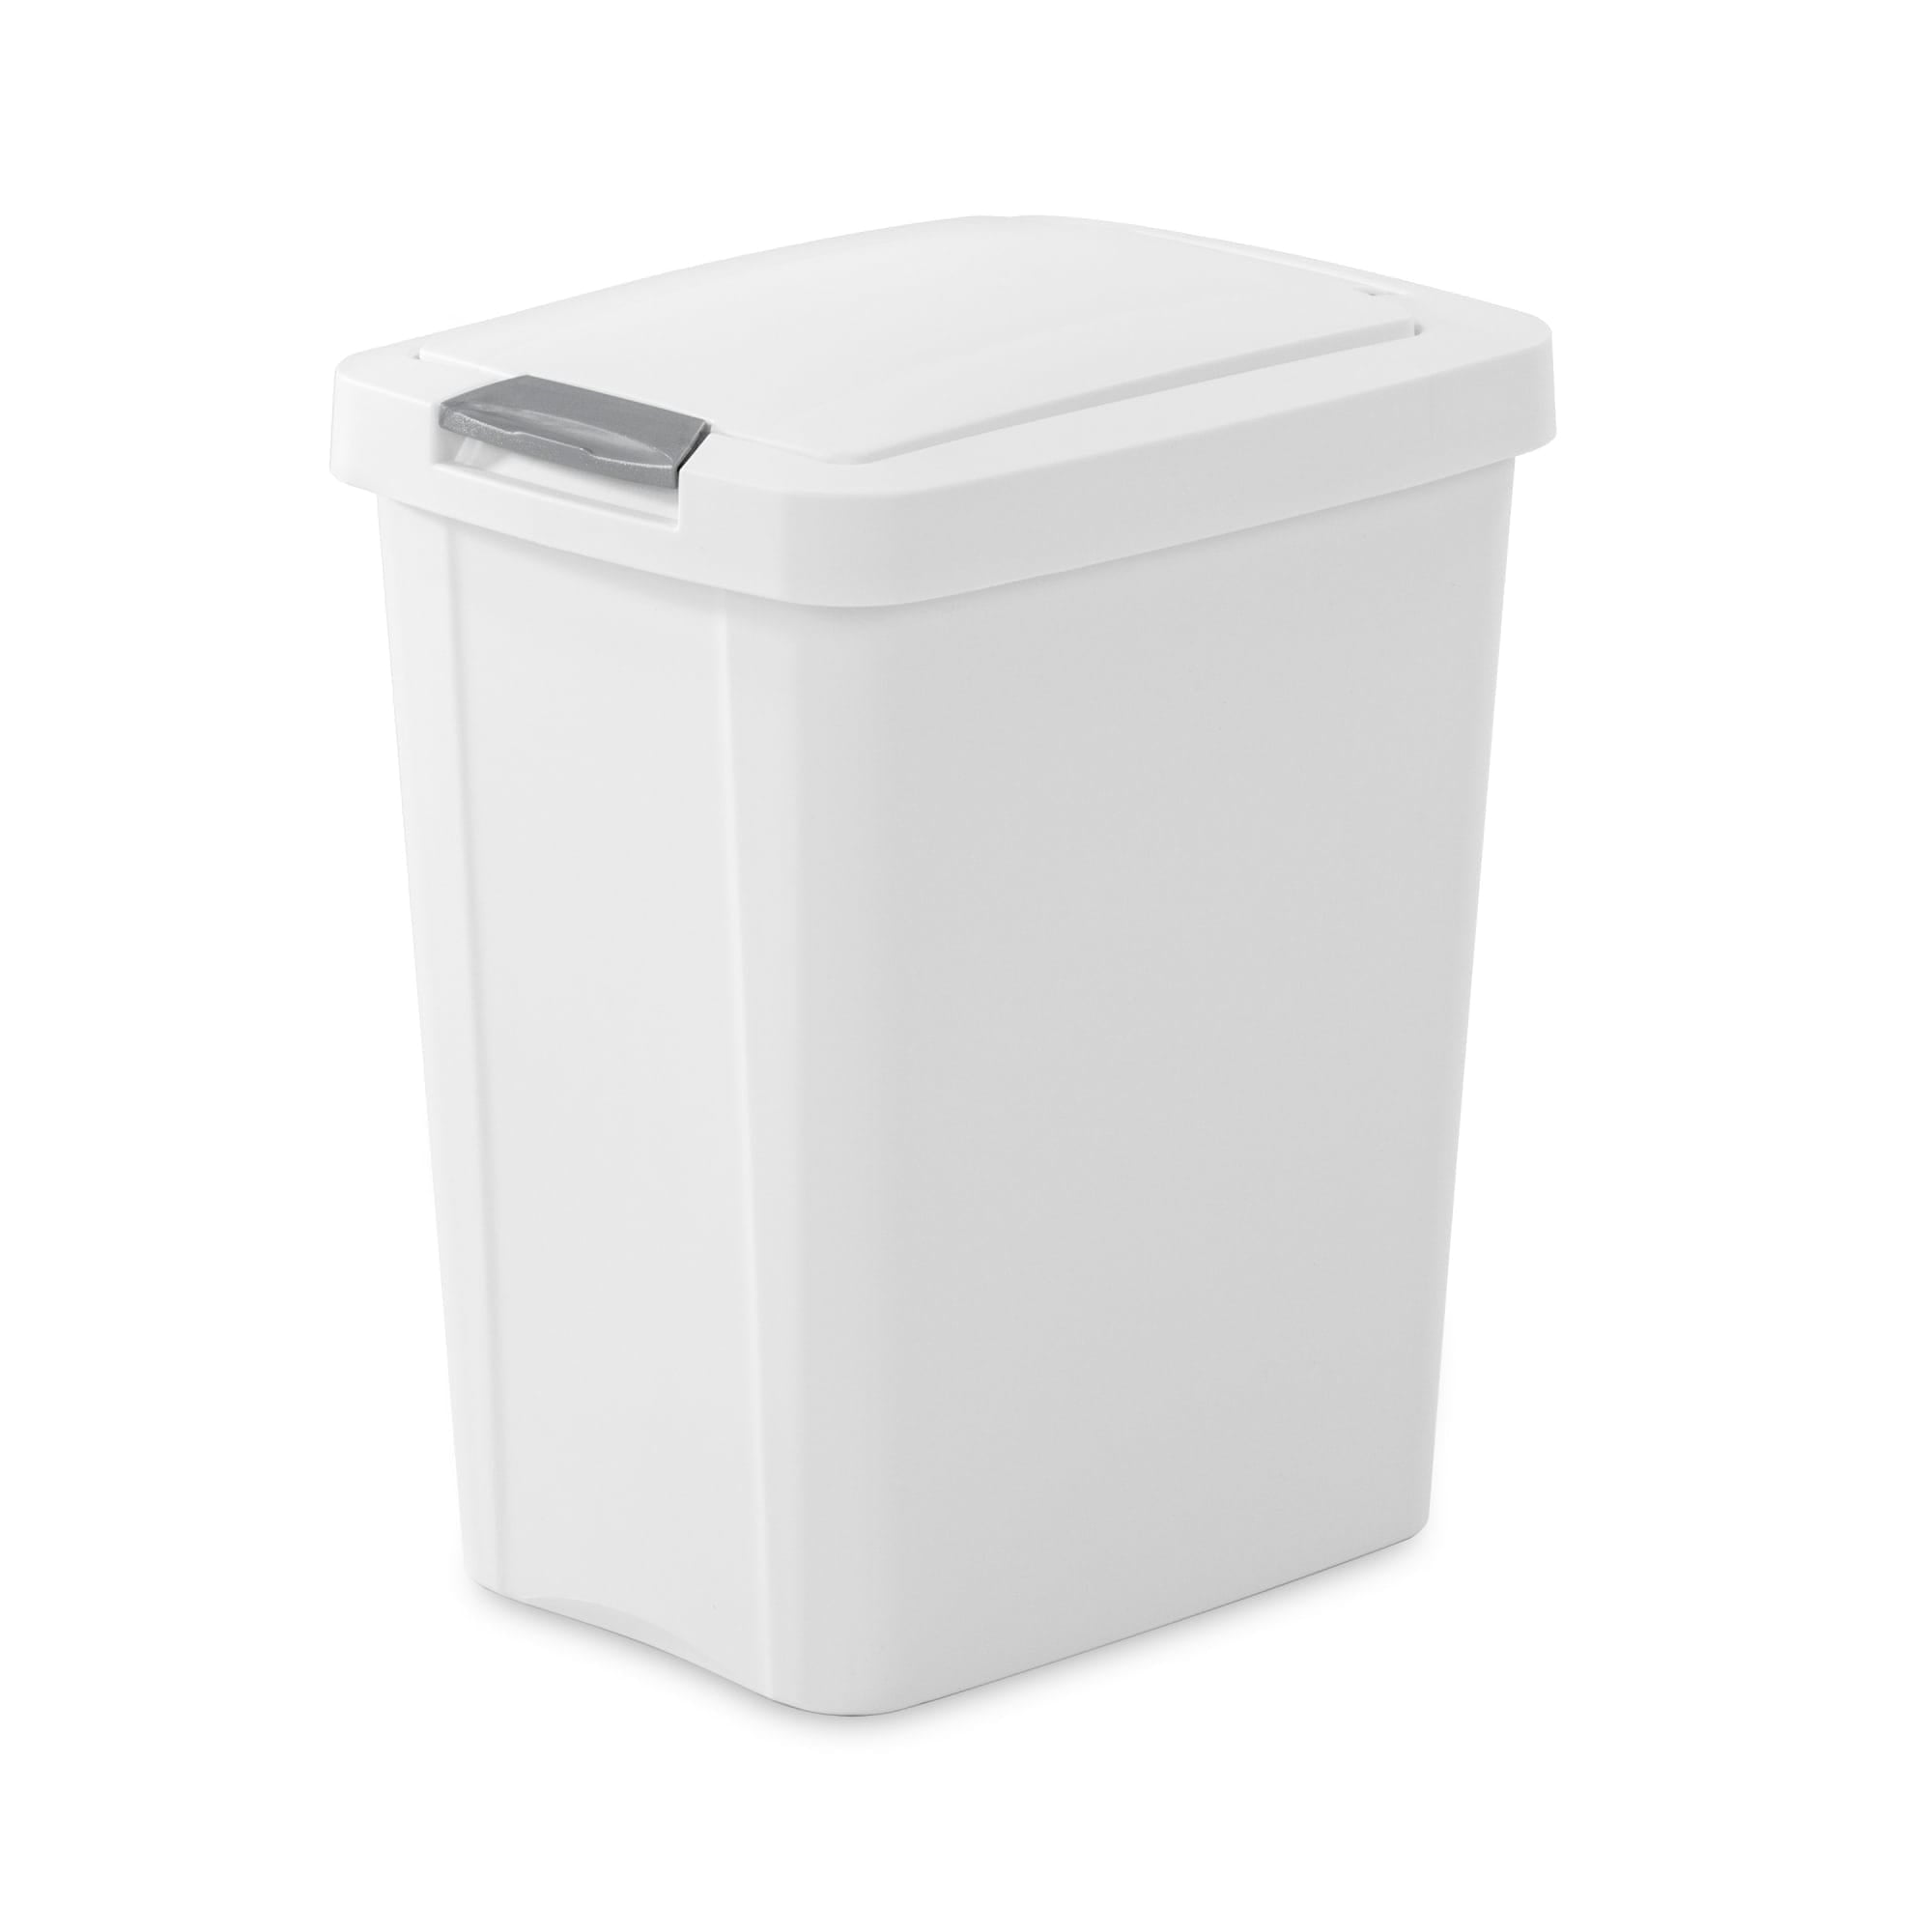 Sterilite  7.5 Gallon / 28 Liter TouchTop™ Wastebasket White $15.00 EACH, CASE PACK OF 4